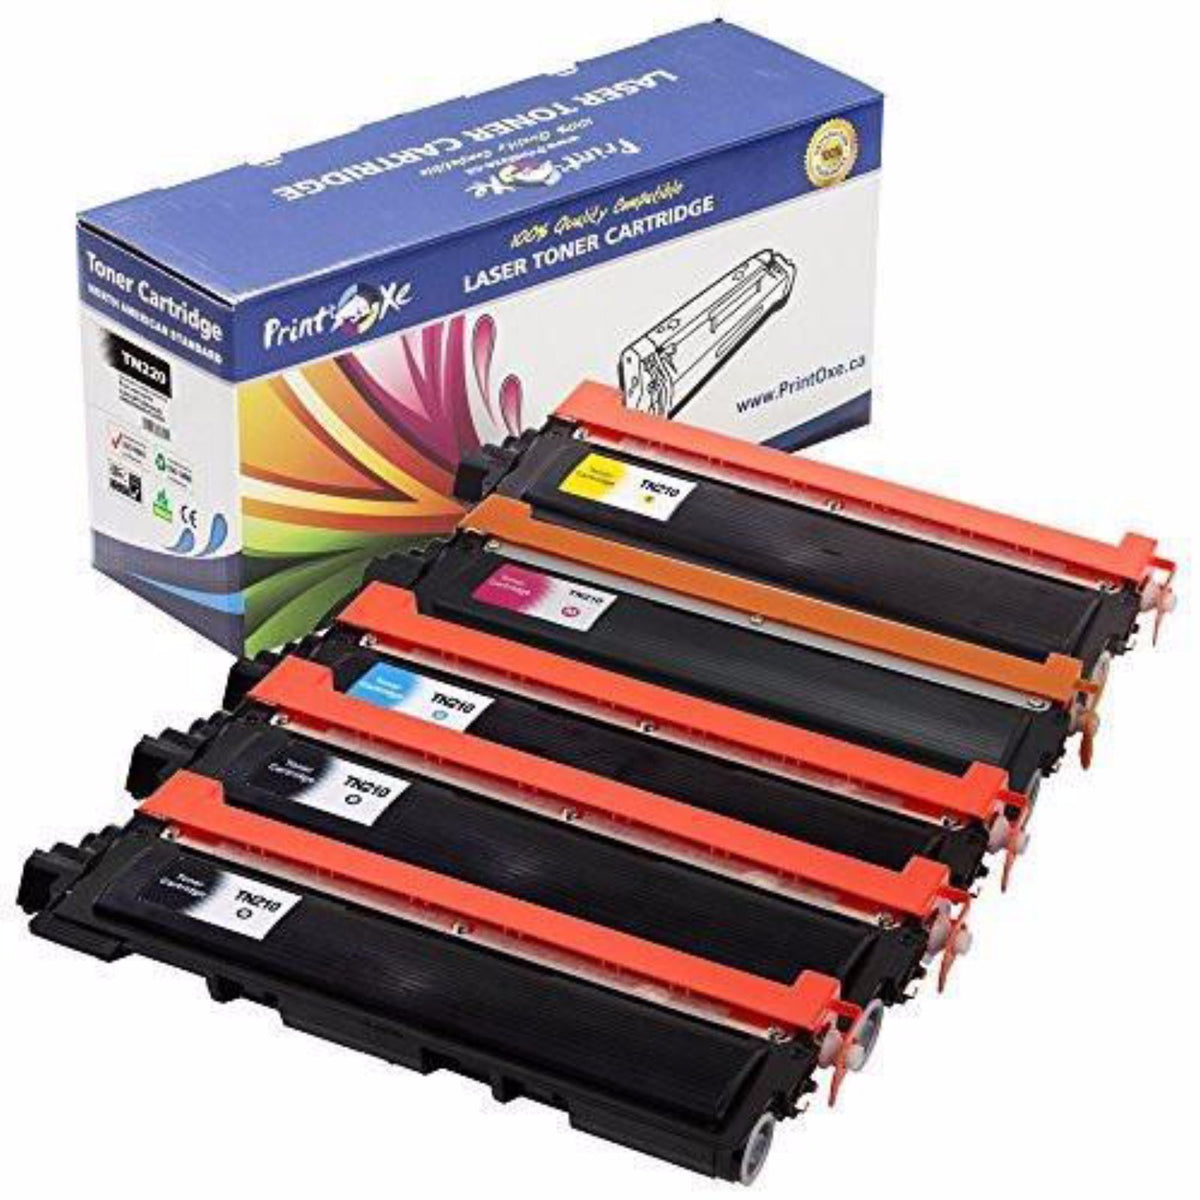 TN210 Compatible Set + Black of 5 Cartridges TN 210 for Brother MFC-9010CN MFC-9120CN MFC-9320CW and HL-3040CN HL-3070CW PRINTOXE Toner Cartridges